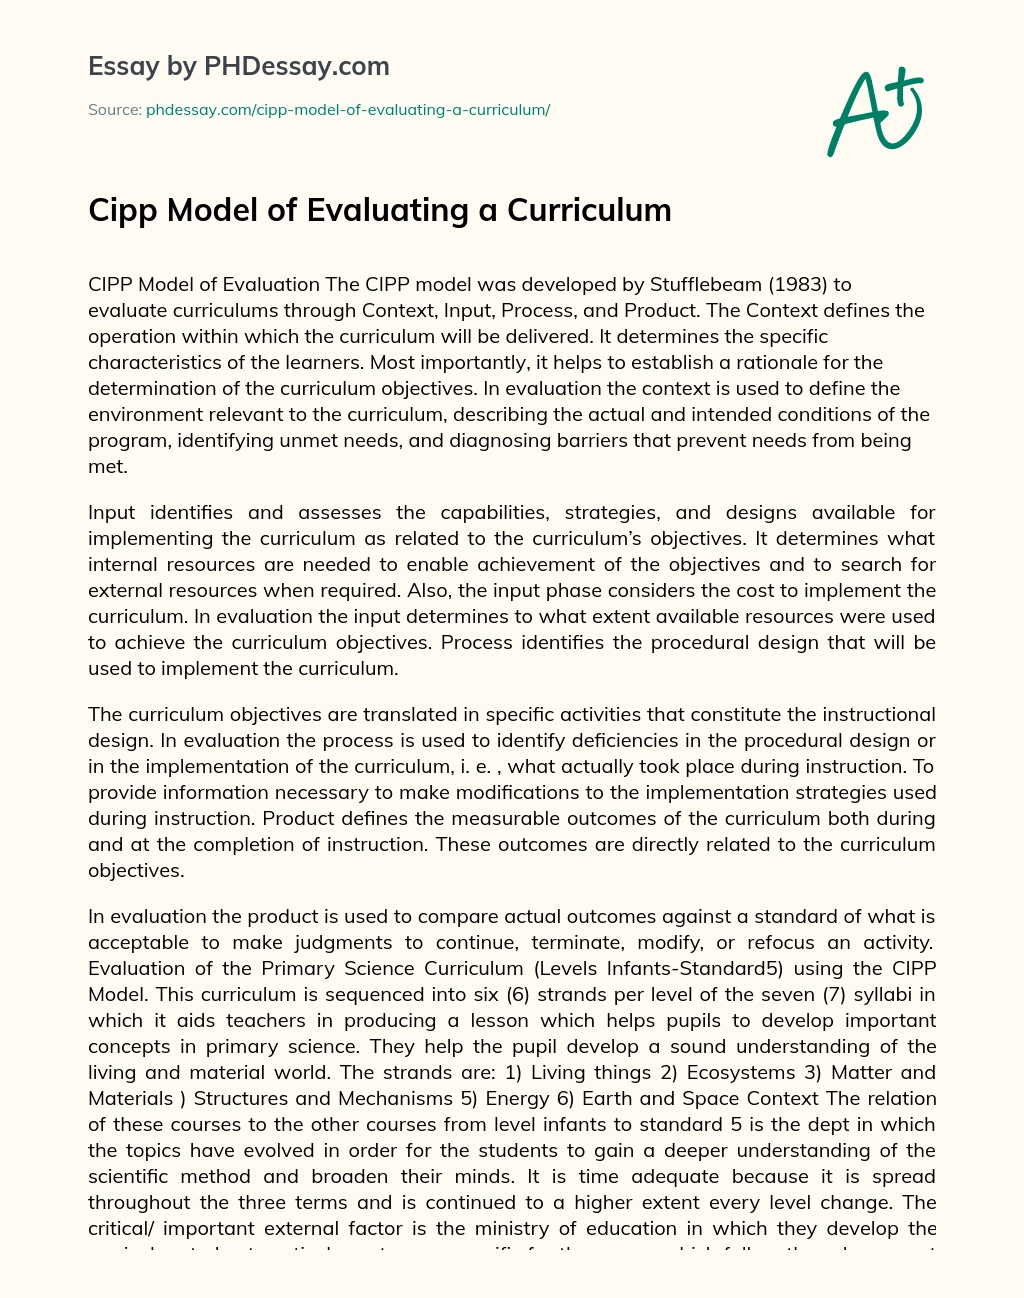 Cipp Model of Evaluating a Curriculum essay